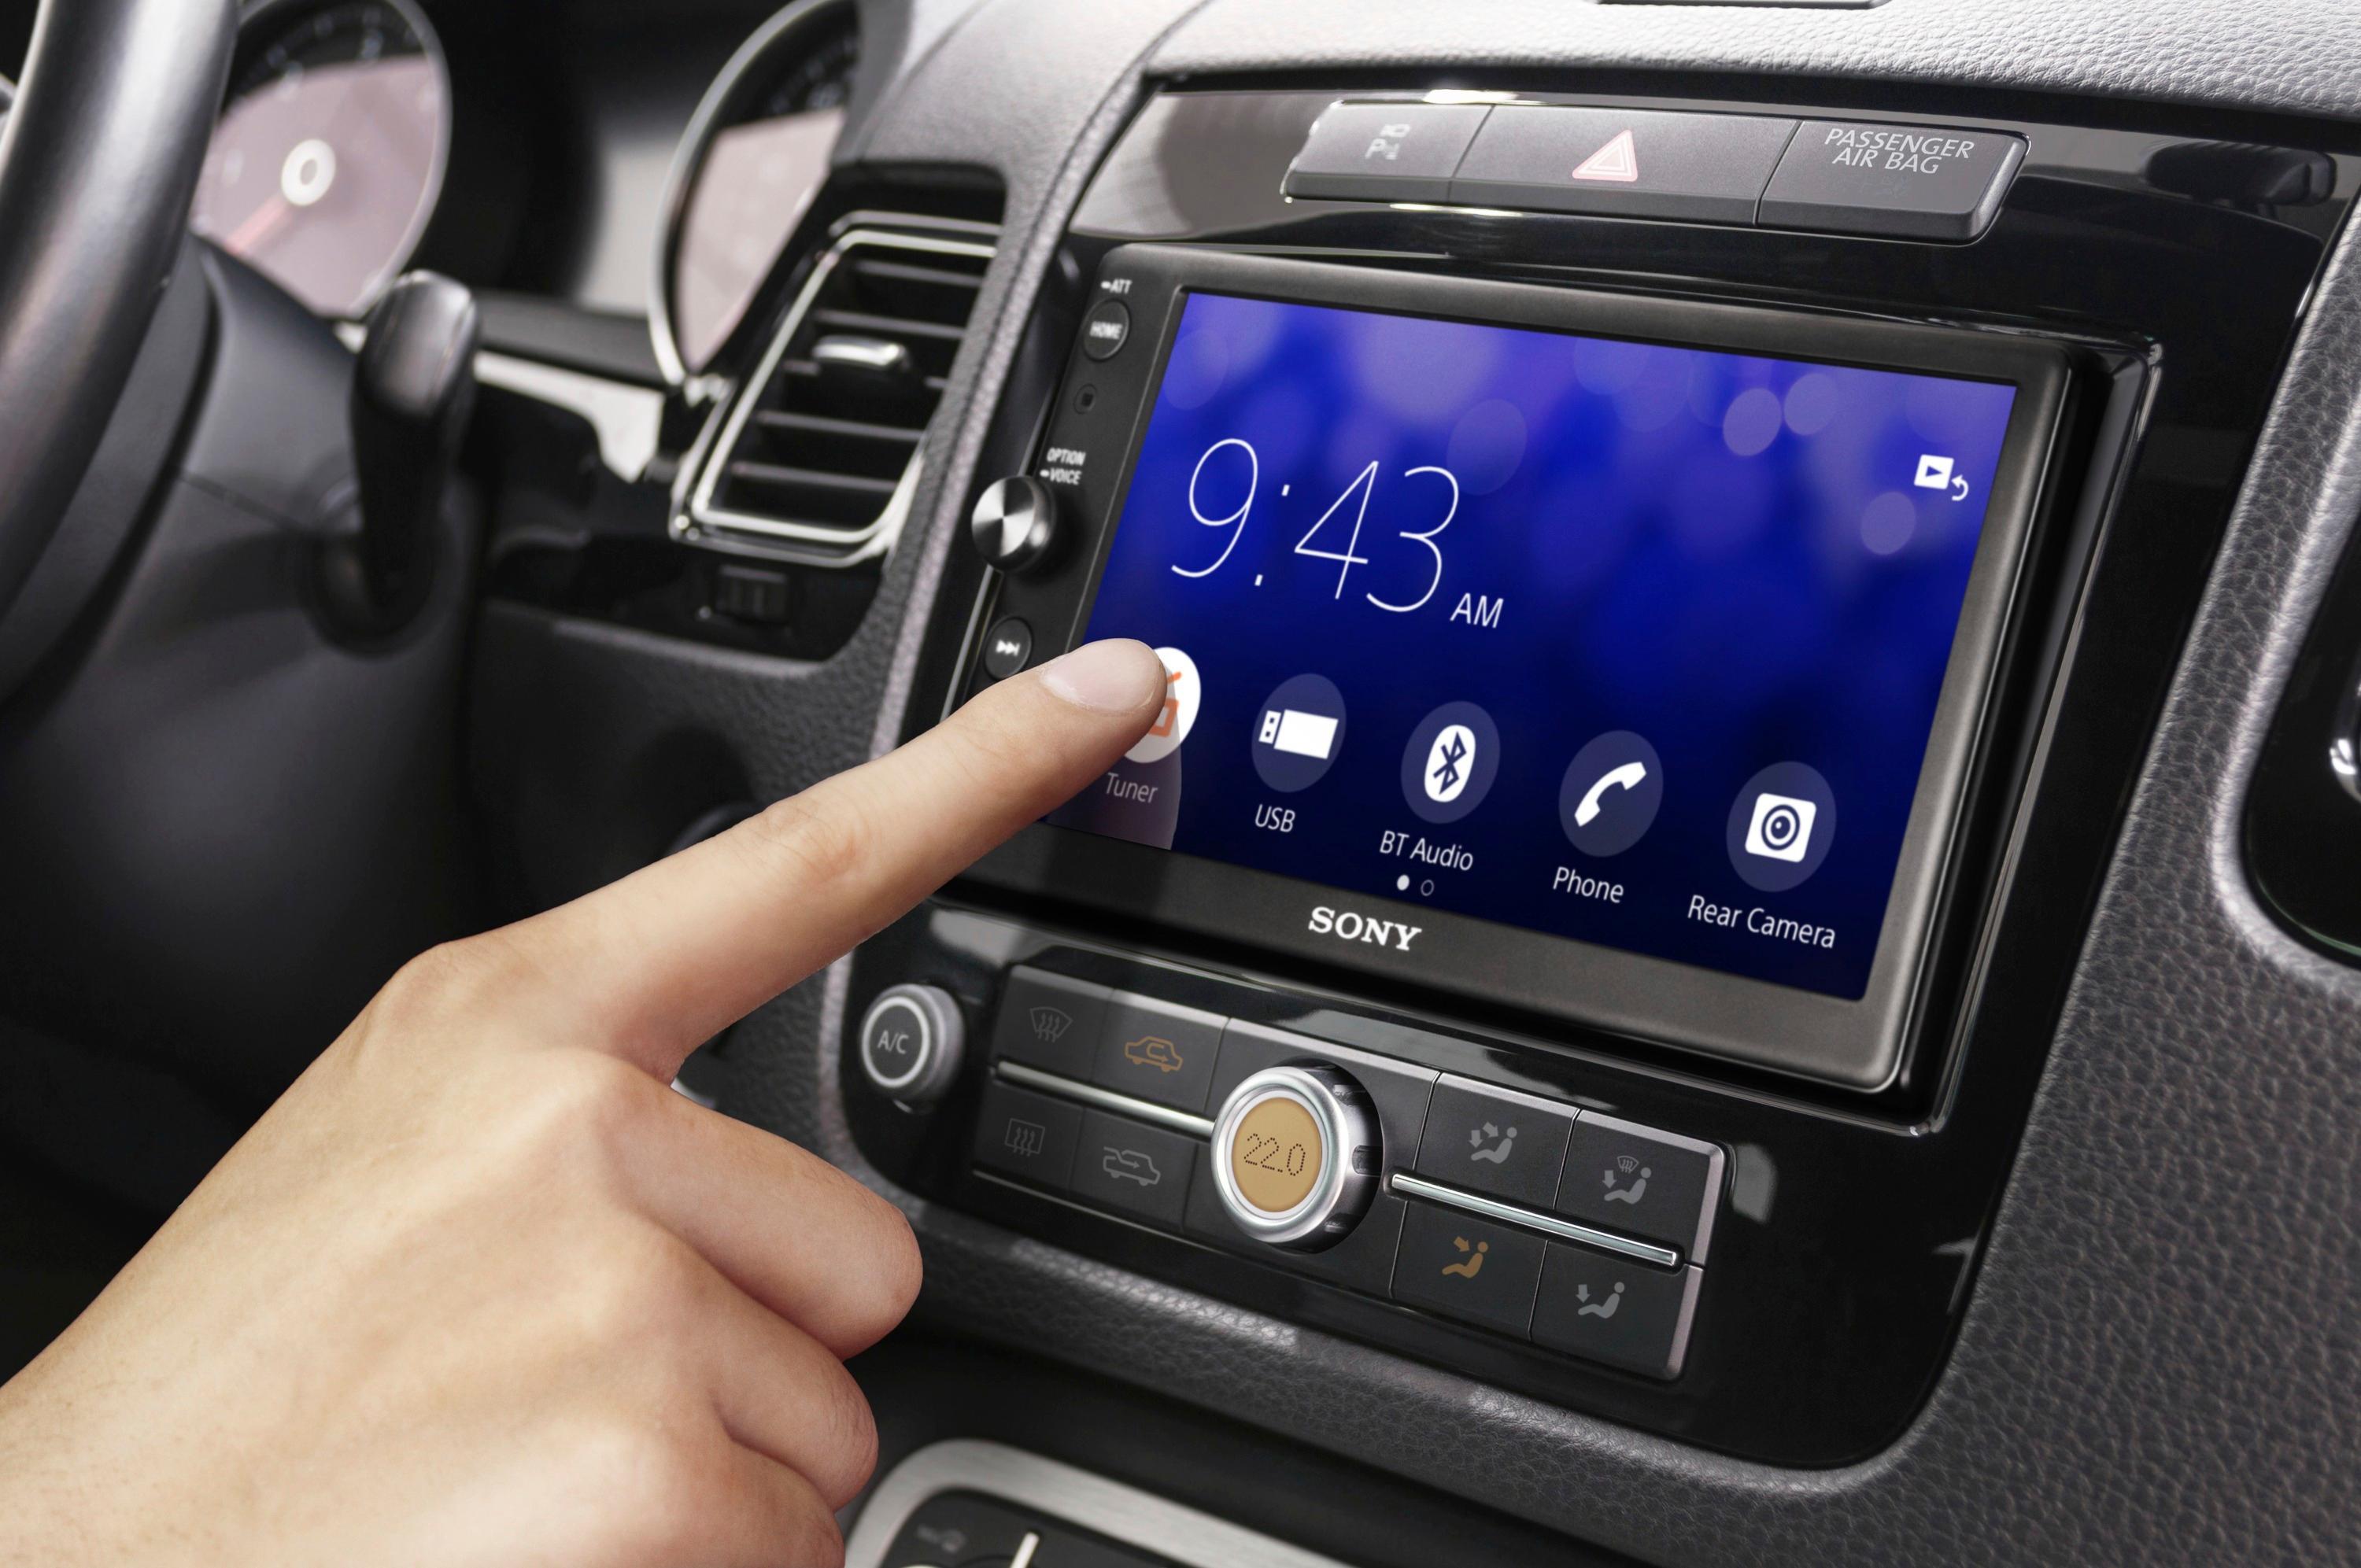 Sony 6.95 Android Auto and Apple CarPlay Bluetooth Digital Media Receiver  Black XAVAX3250 - Best Buy